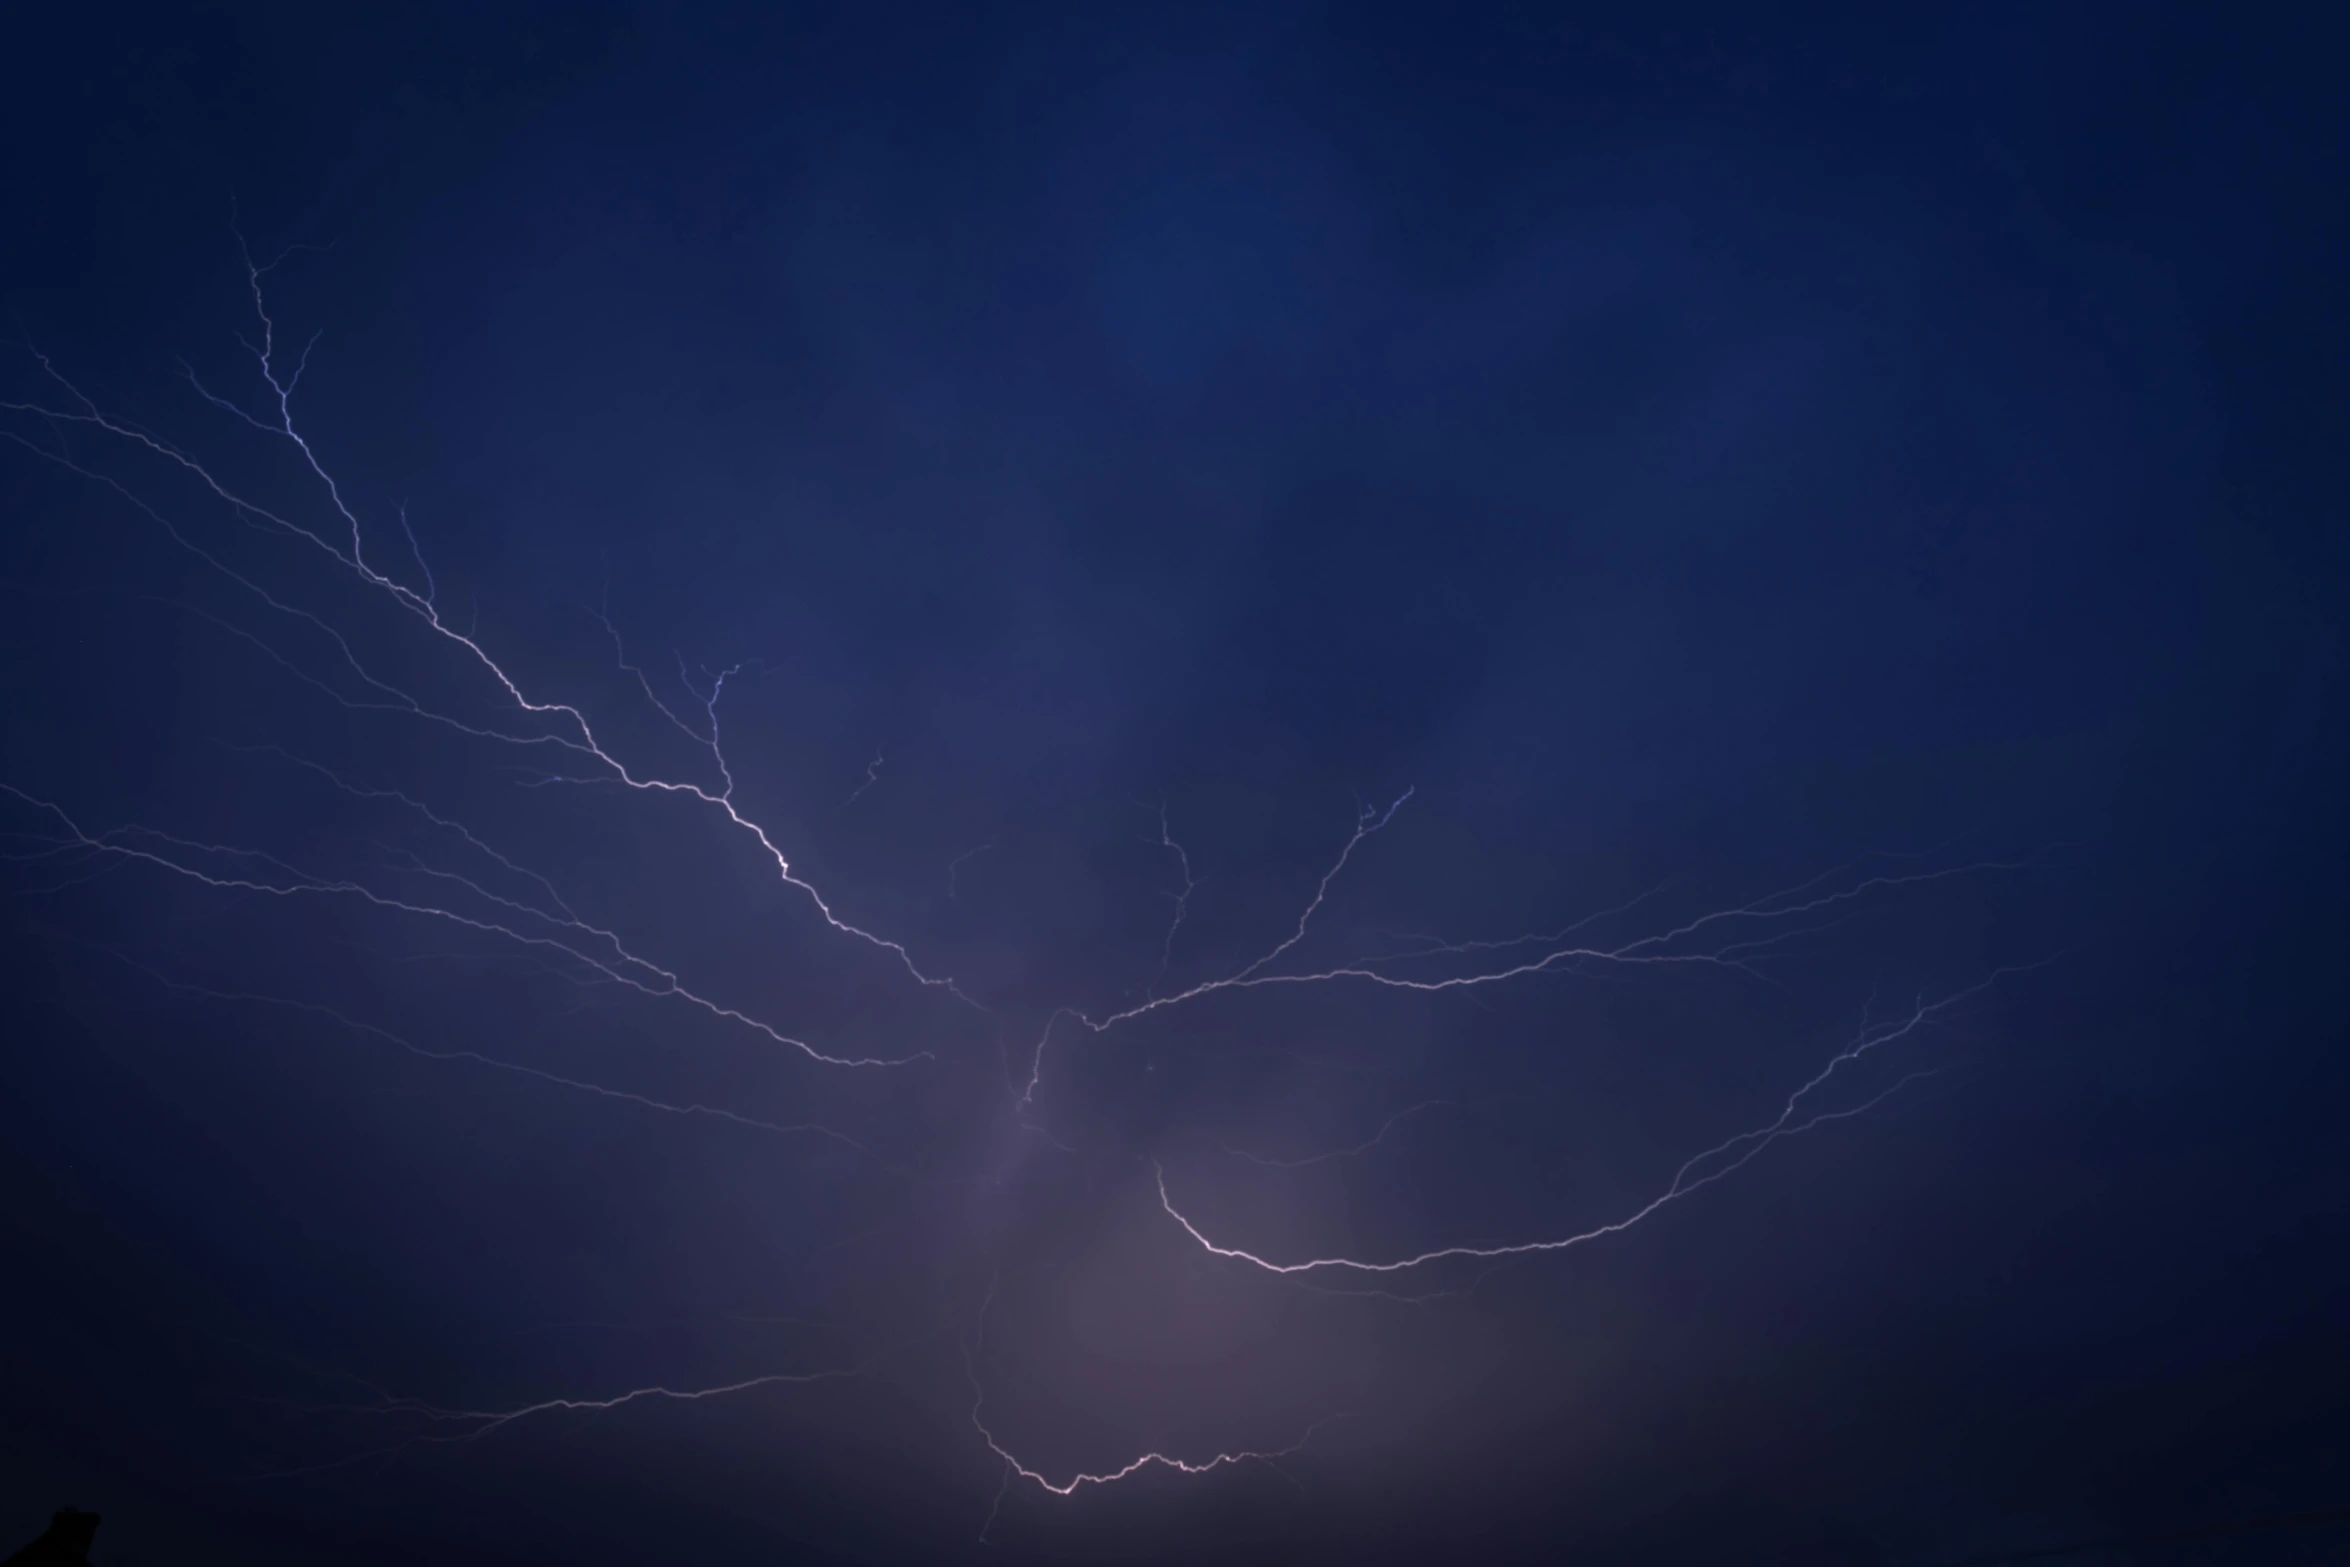 a large group of lightning strikes across a blue sky